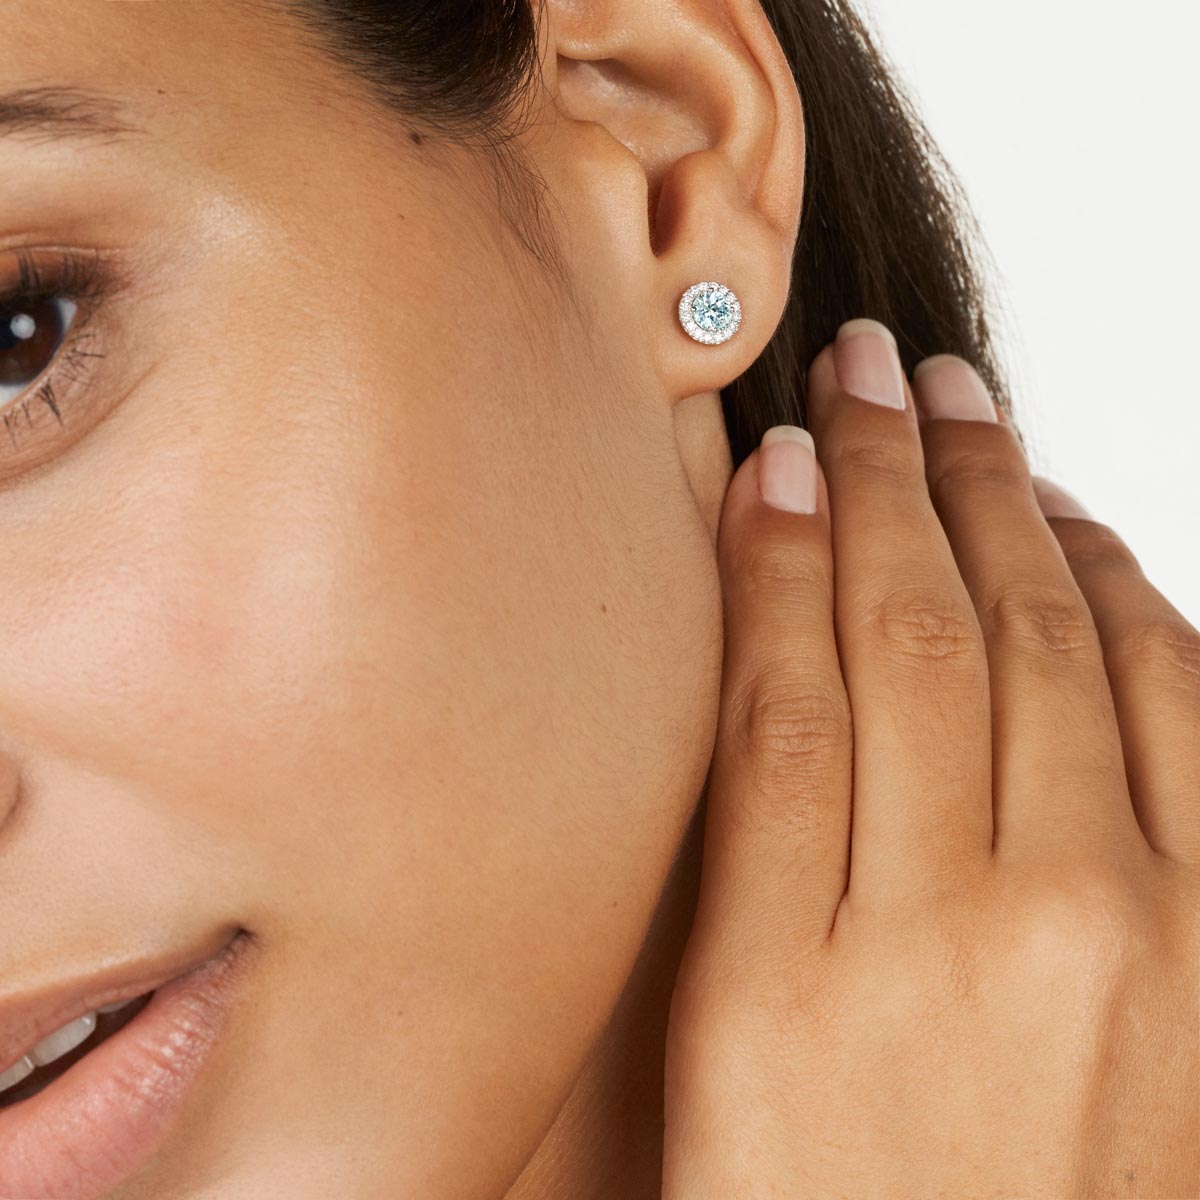 Get the Perfect Men's Blue Diamond Earrings | GLAMIRA.in